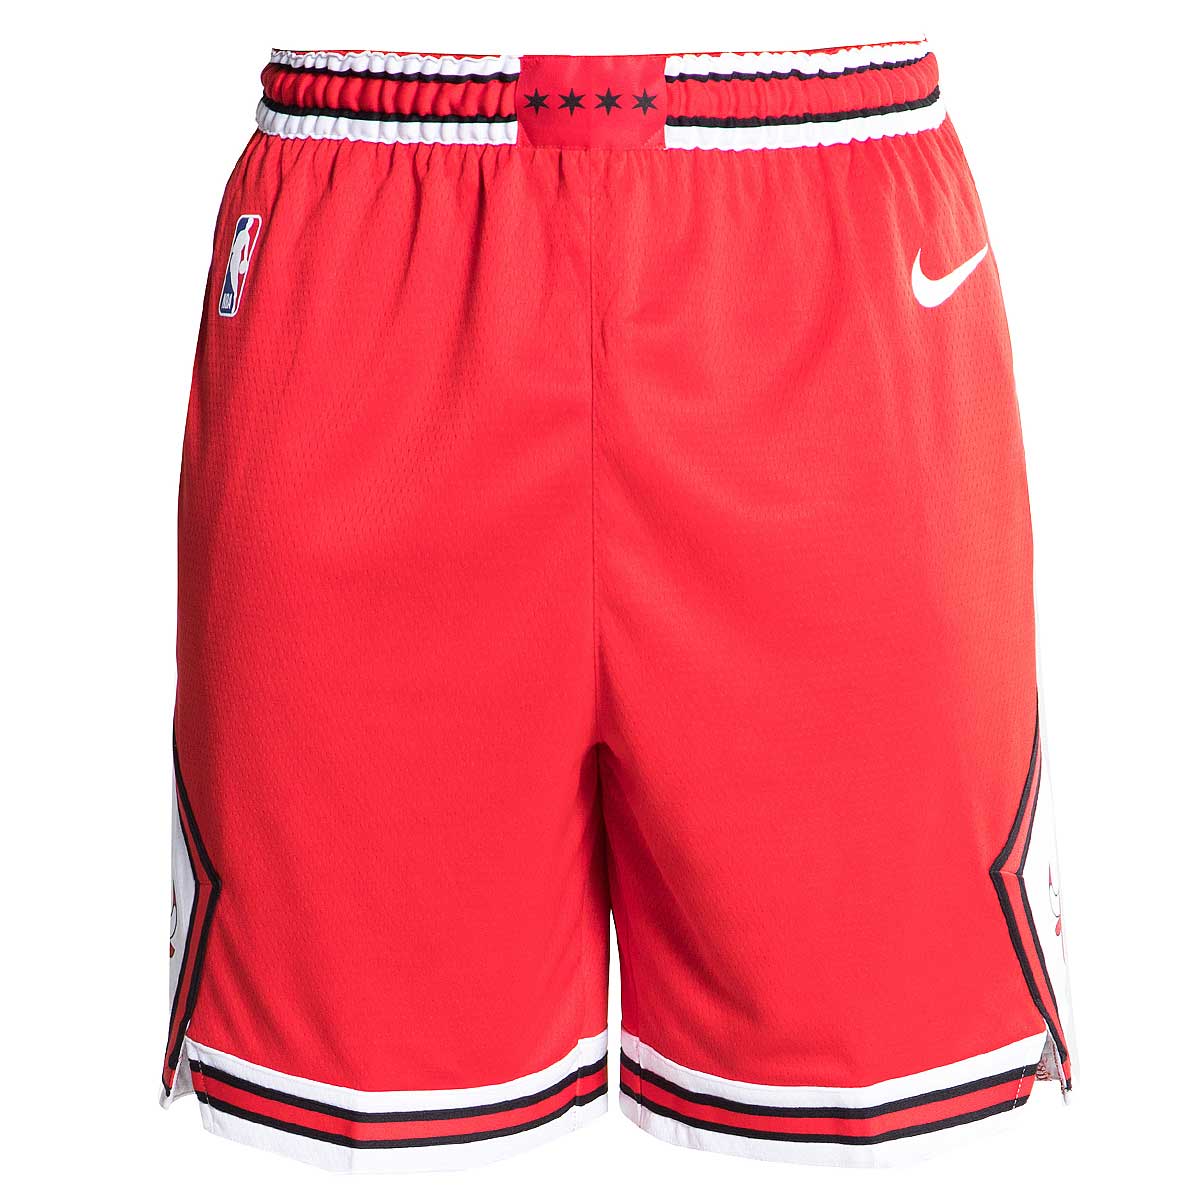 Nike NBA Chicago Bulls Dri-fit Icon Swingman Shorts, University Rot/weiß/weiß M